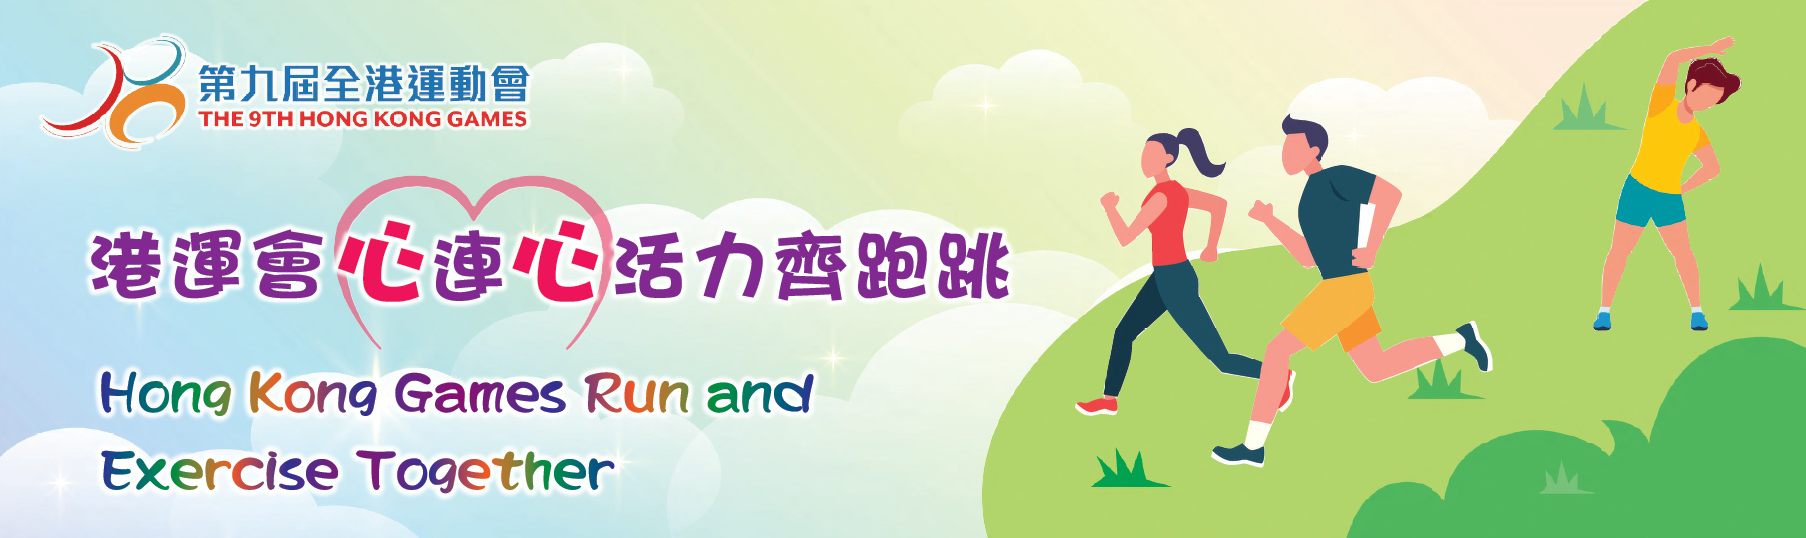 Hong Kong Games Run and Exercise Together 